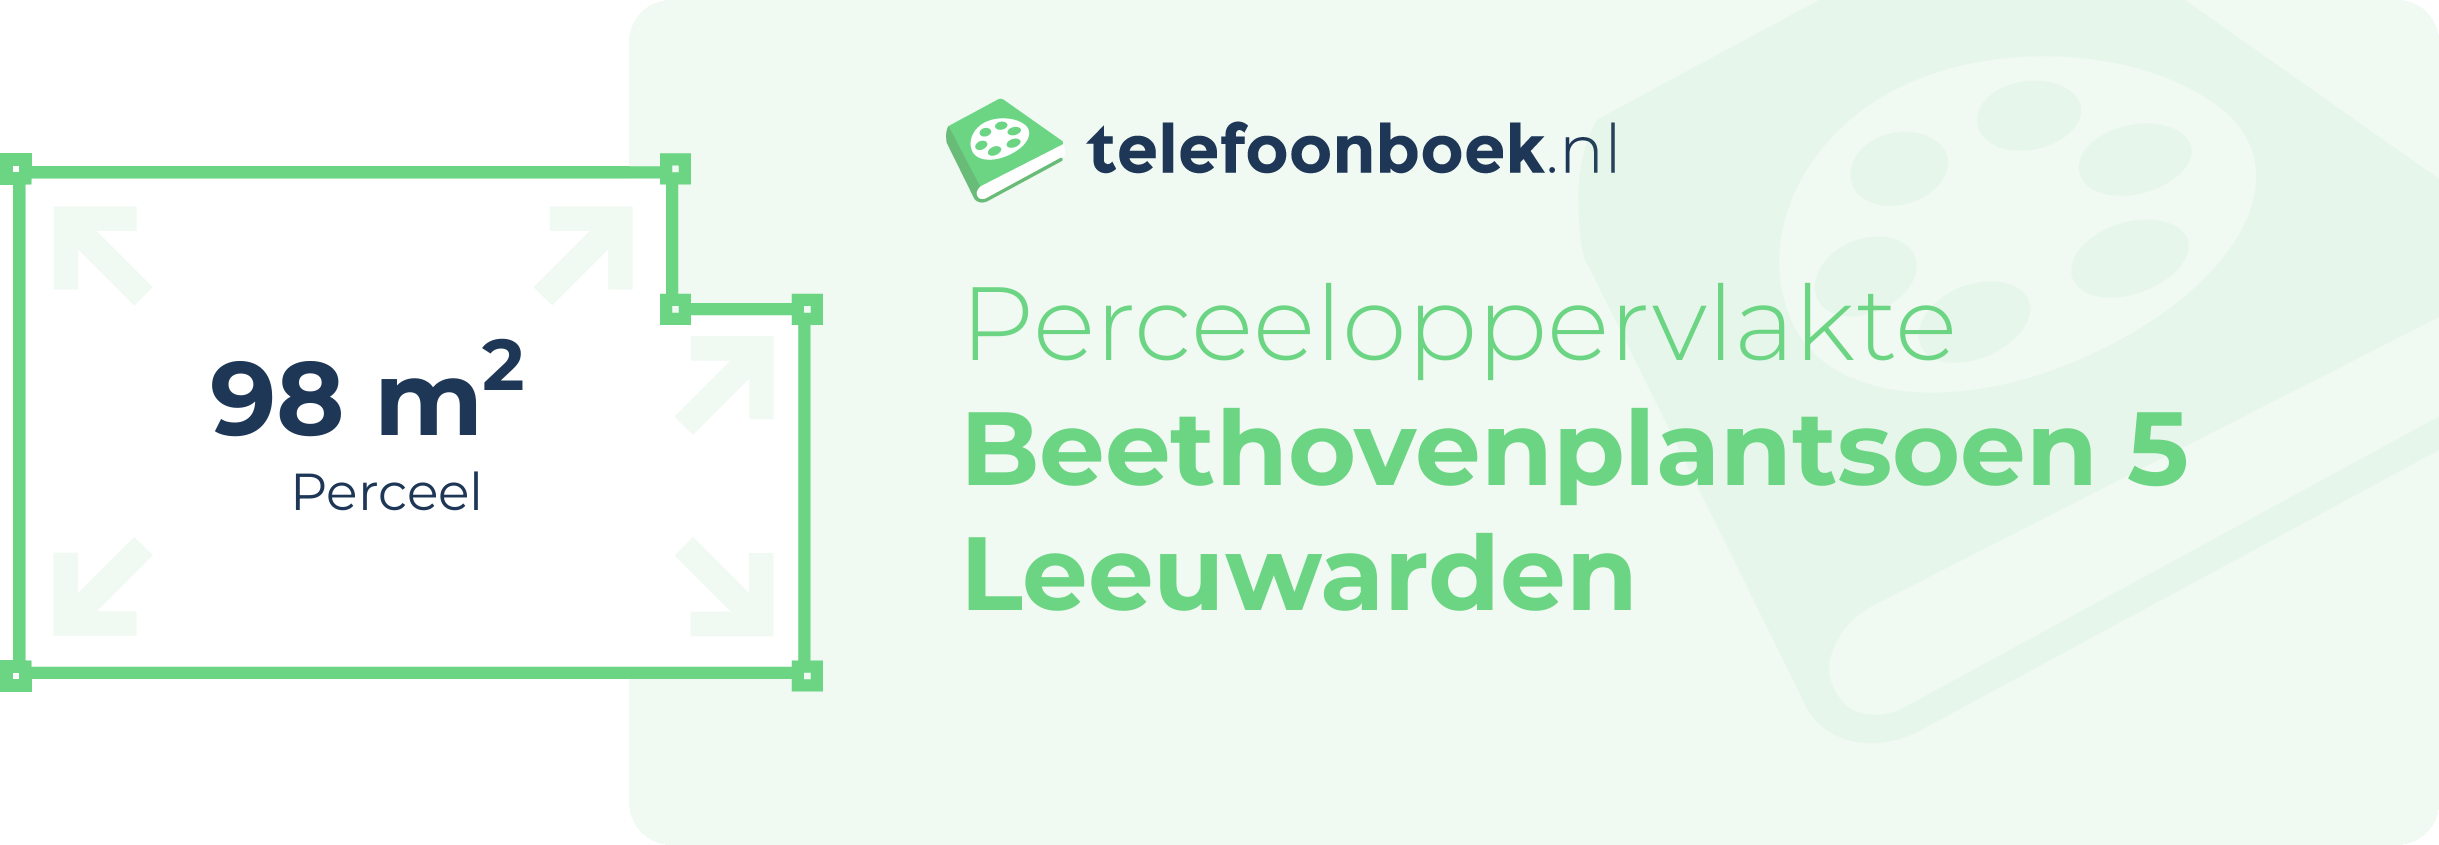 Perceeloppervlakte Beethovenplantsoen 5 Leeuwarden